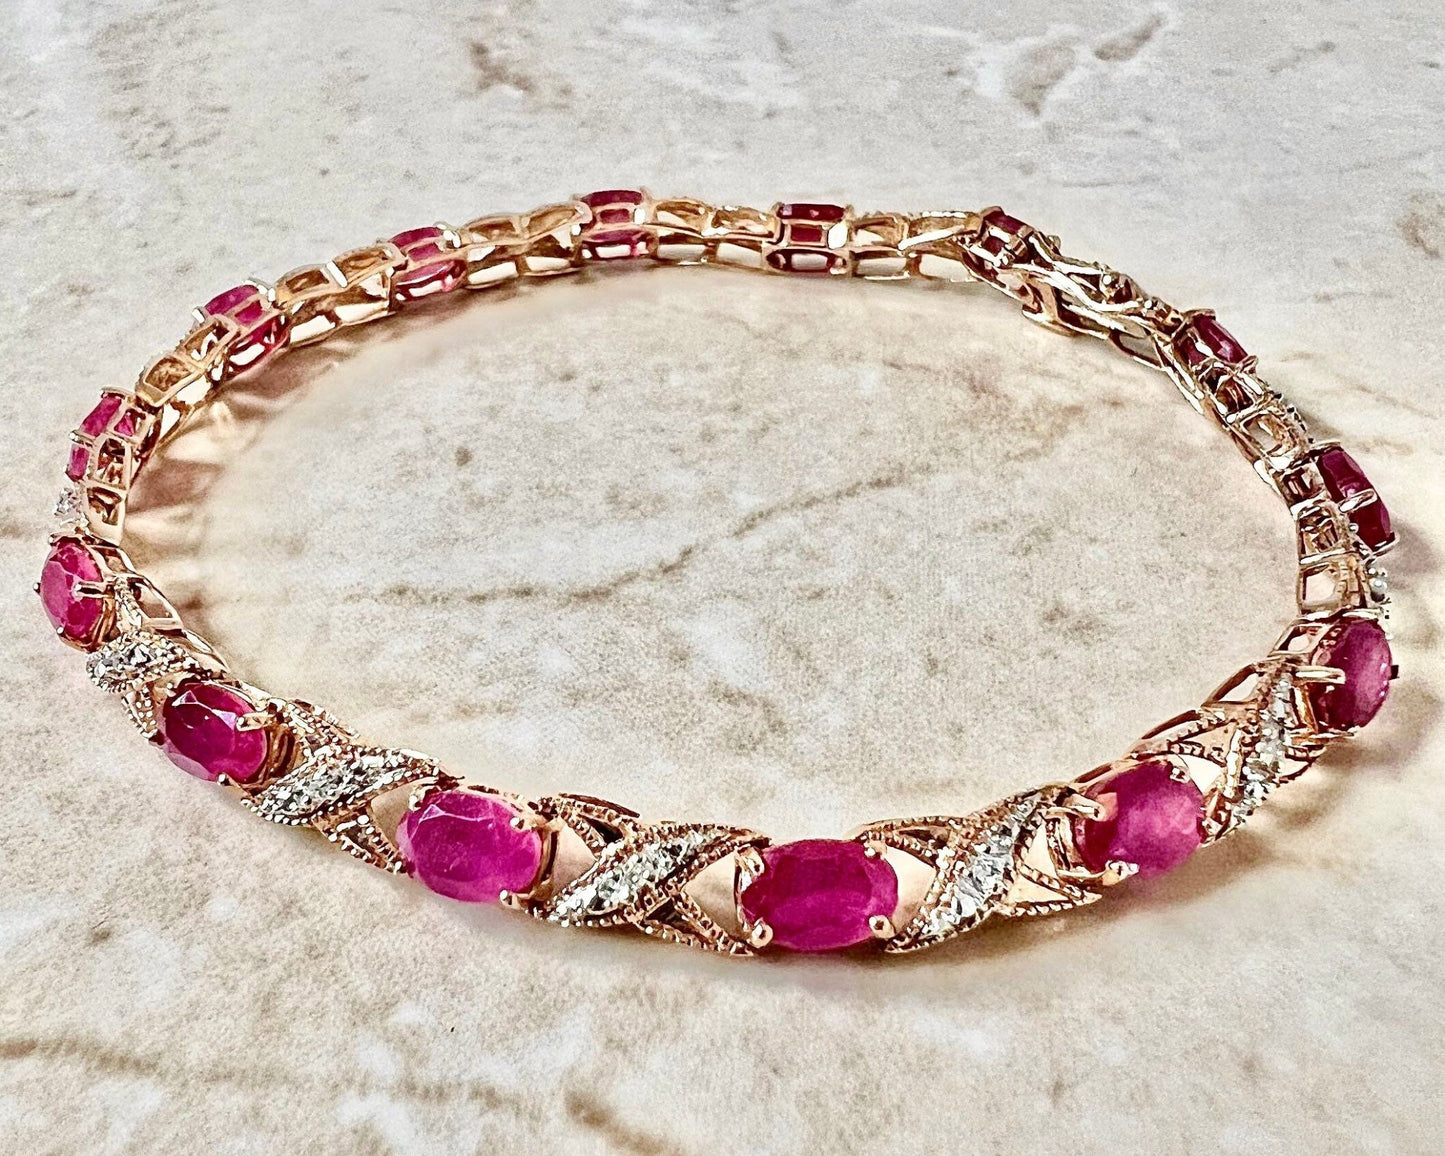 Vintage 10K Ruby And Diamond Bracelet - Rose Gold Ruby Bracelet - Hugs And Kisses Rose Gold Bracelet - July Birthstone - Best Gift For Her